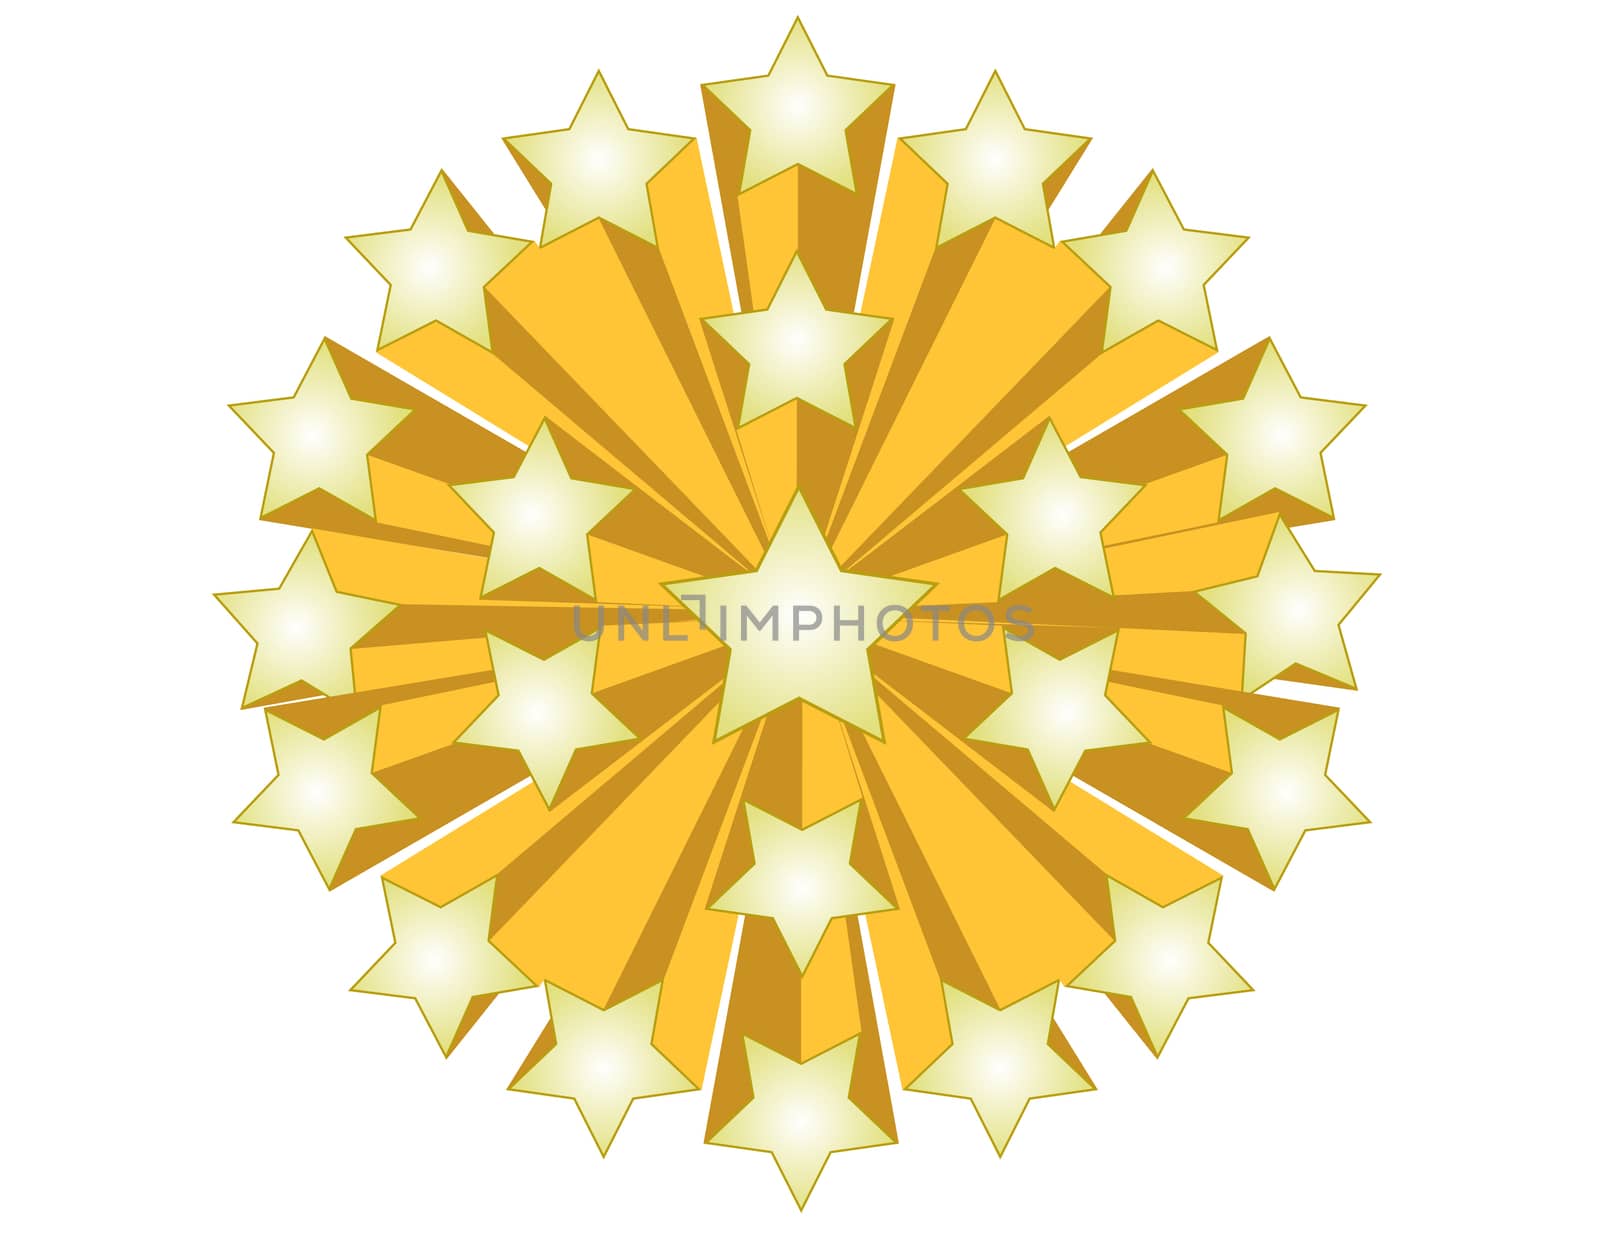 Golden Star ball illustration isolated over a white background.